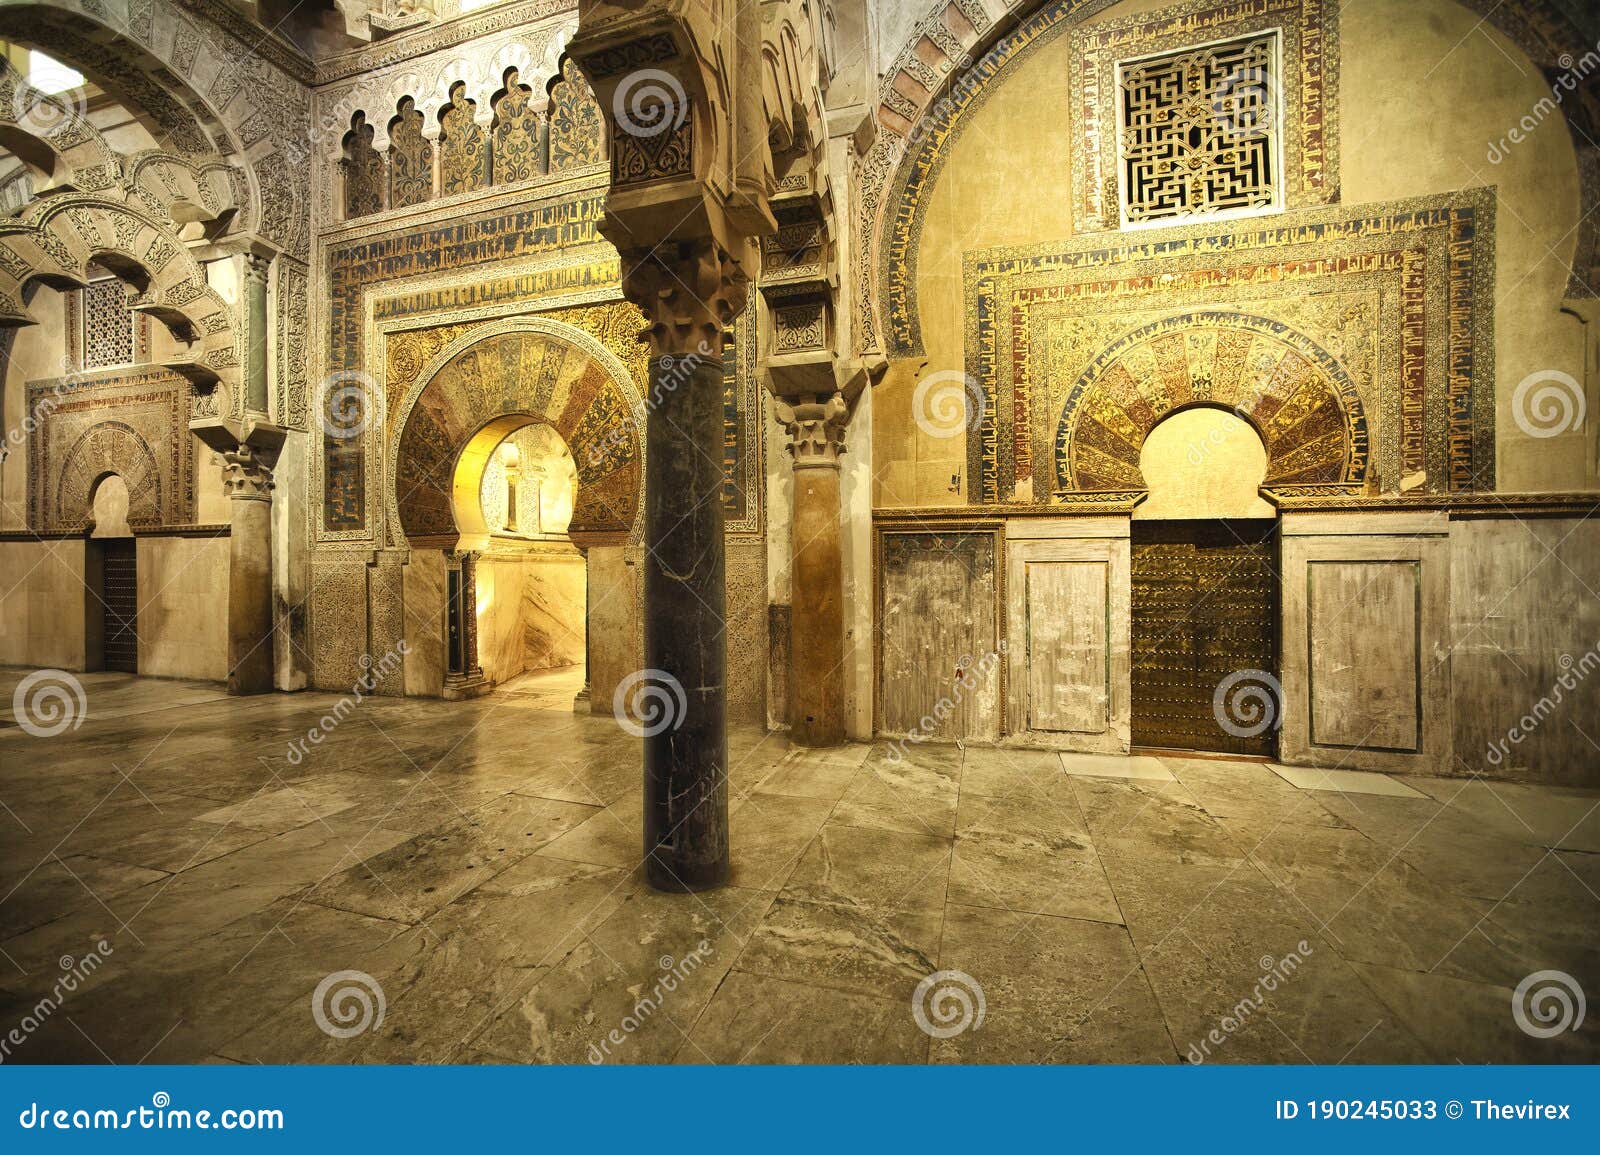 mezquita de cordoba, the great mosque in cordoba, spain.